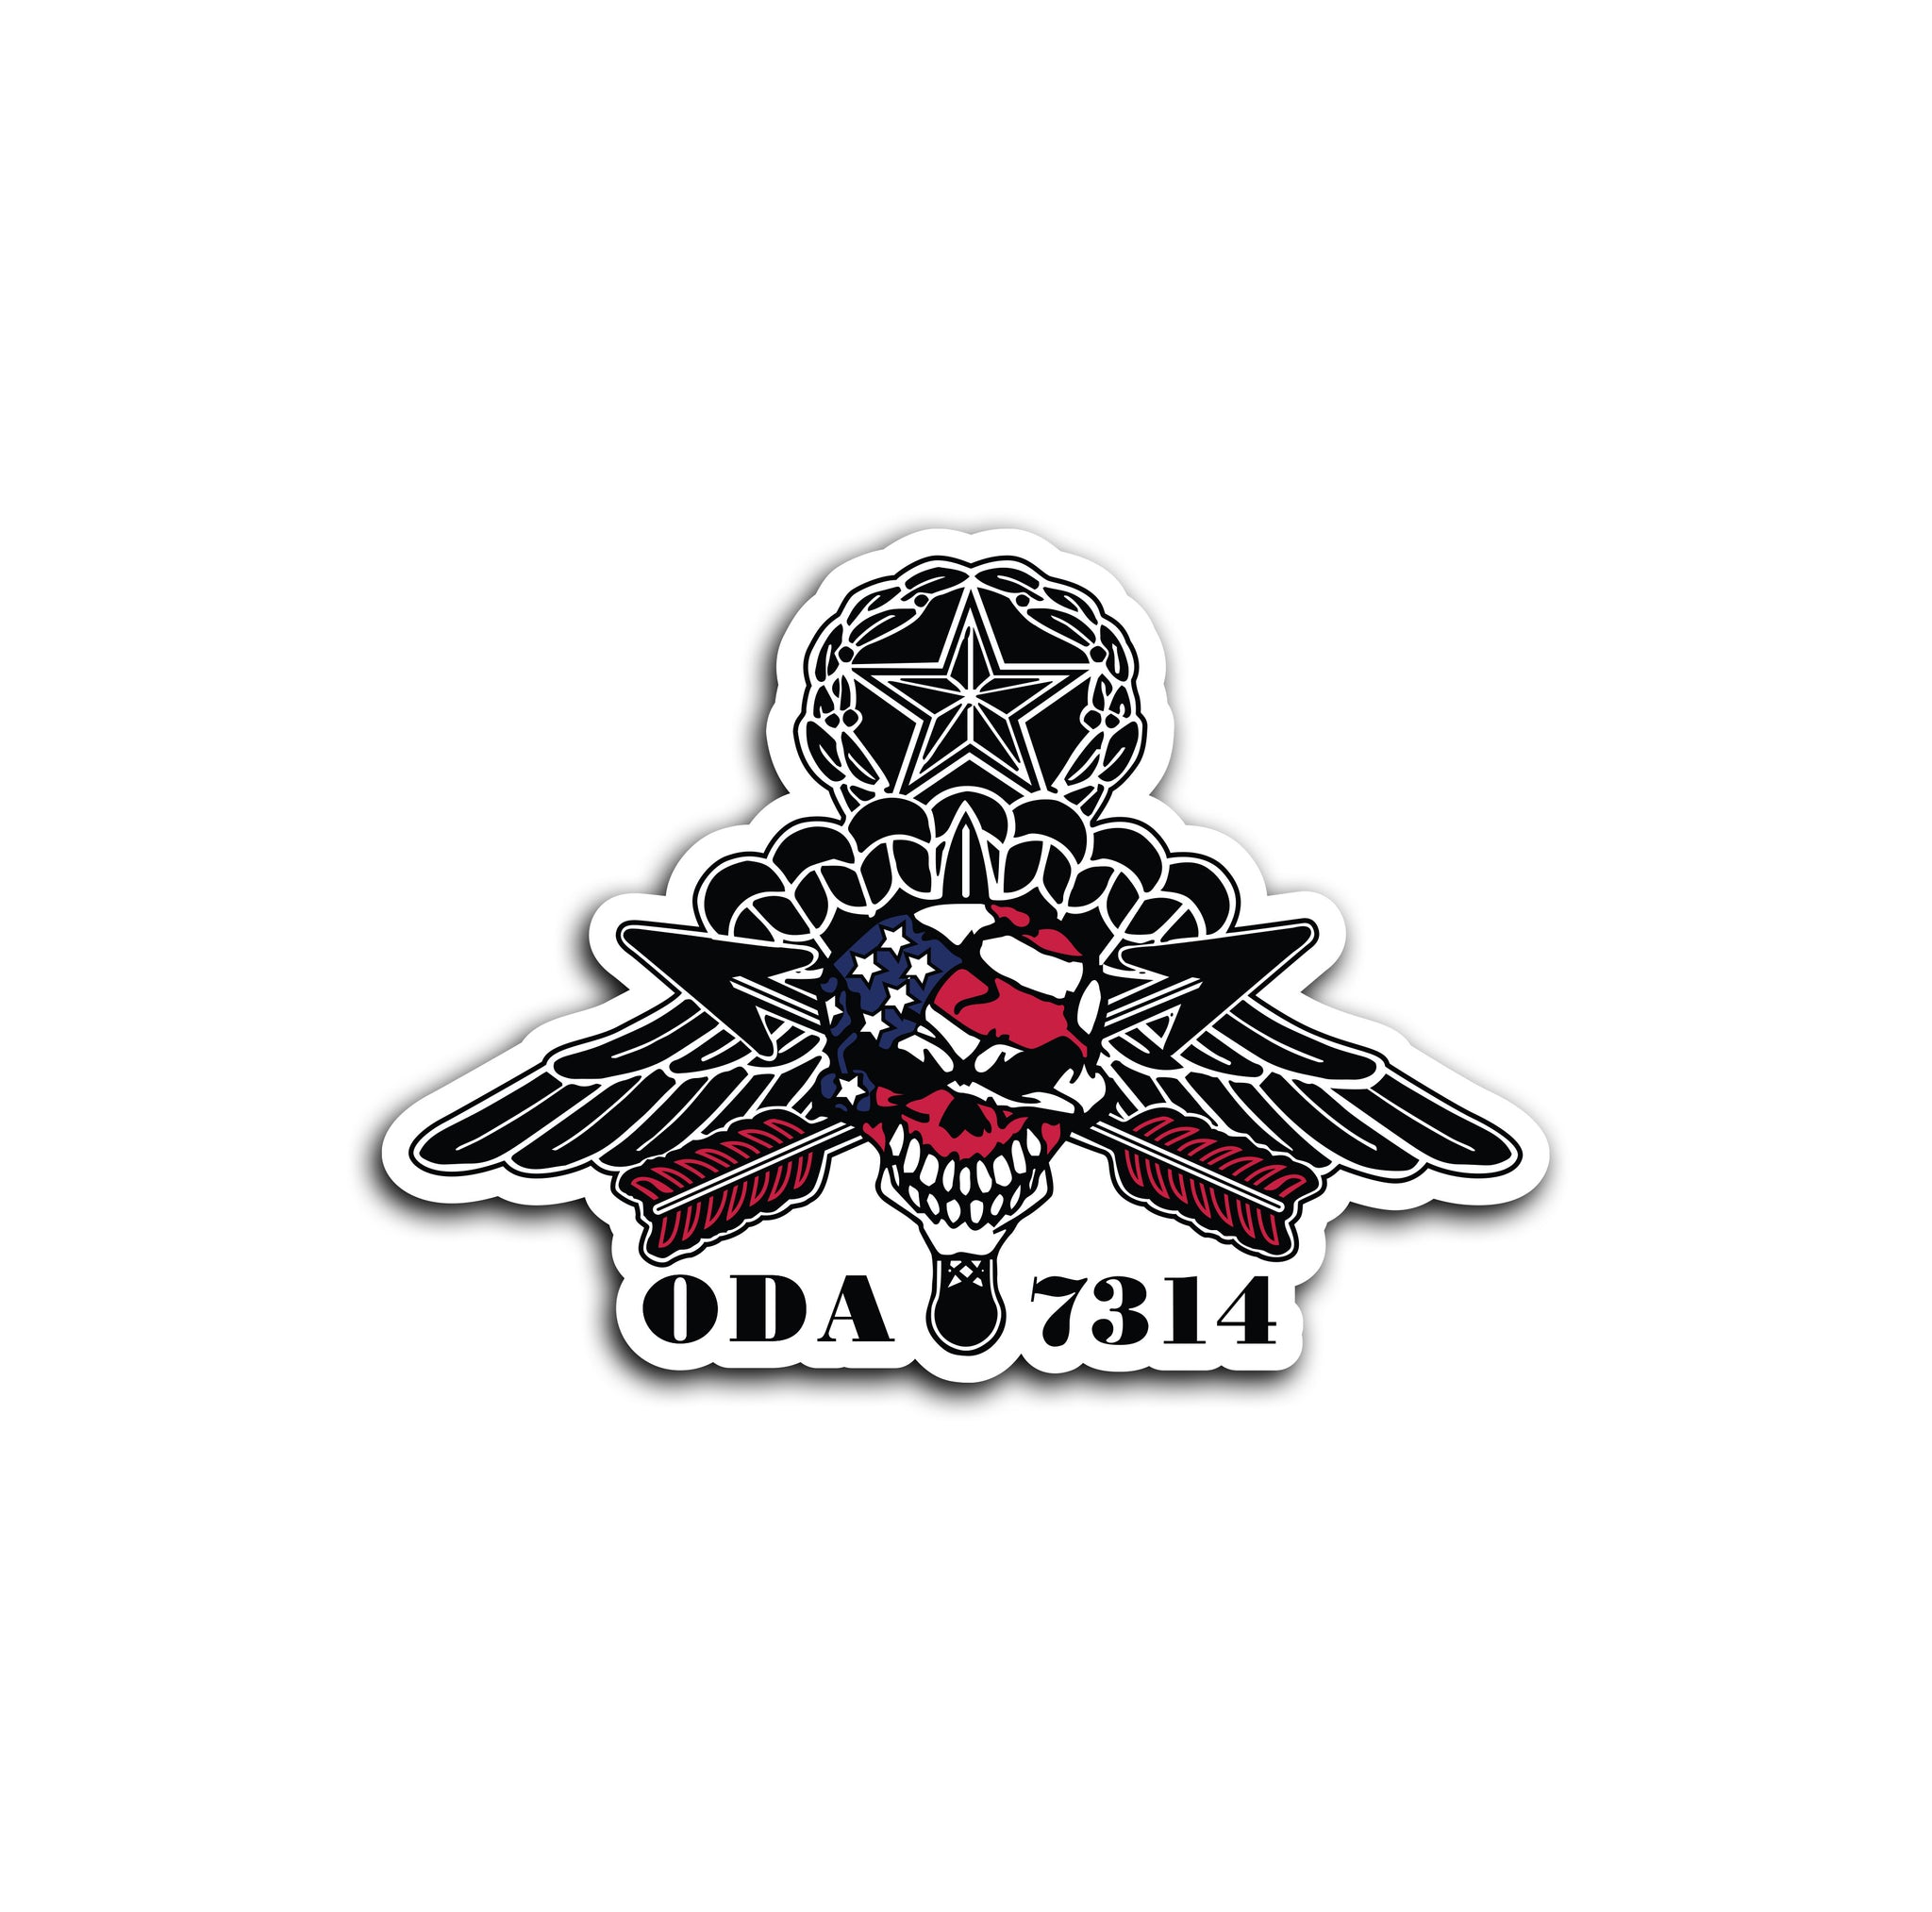 ODA, Americas